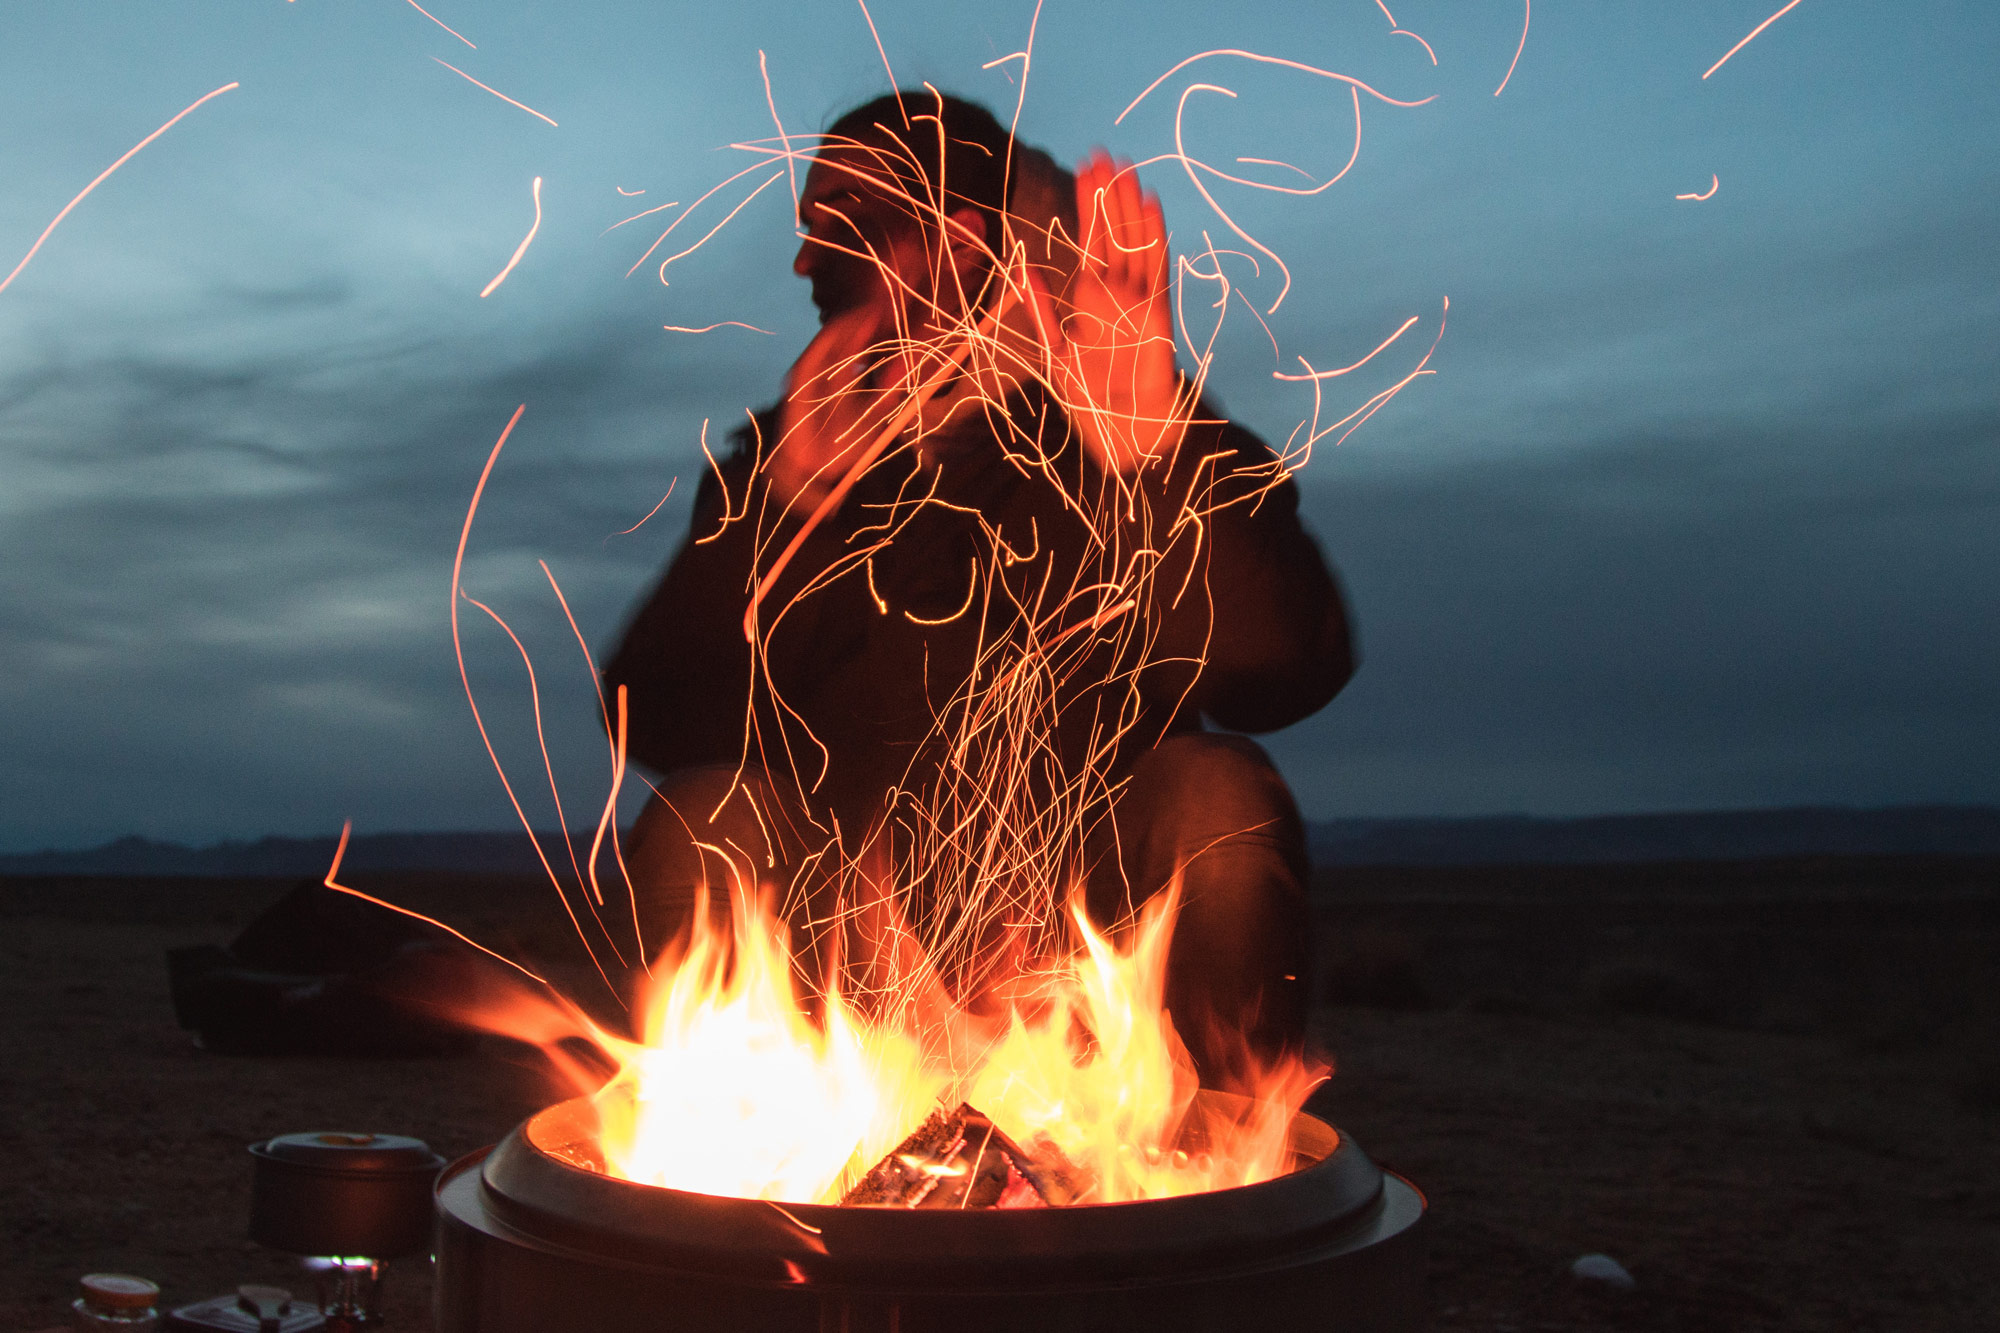 Campfire Roast: Have a campfire roast.